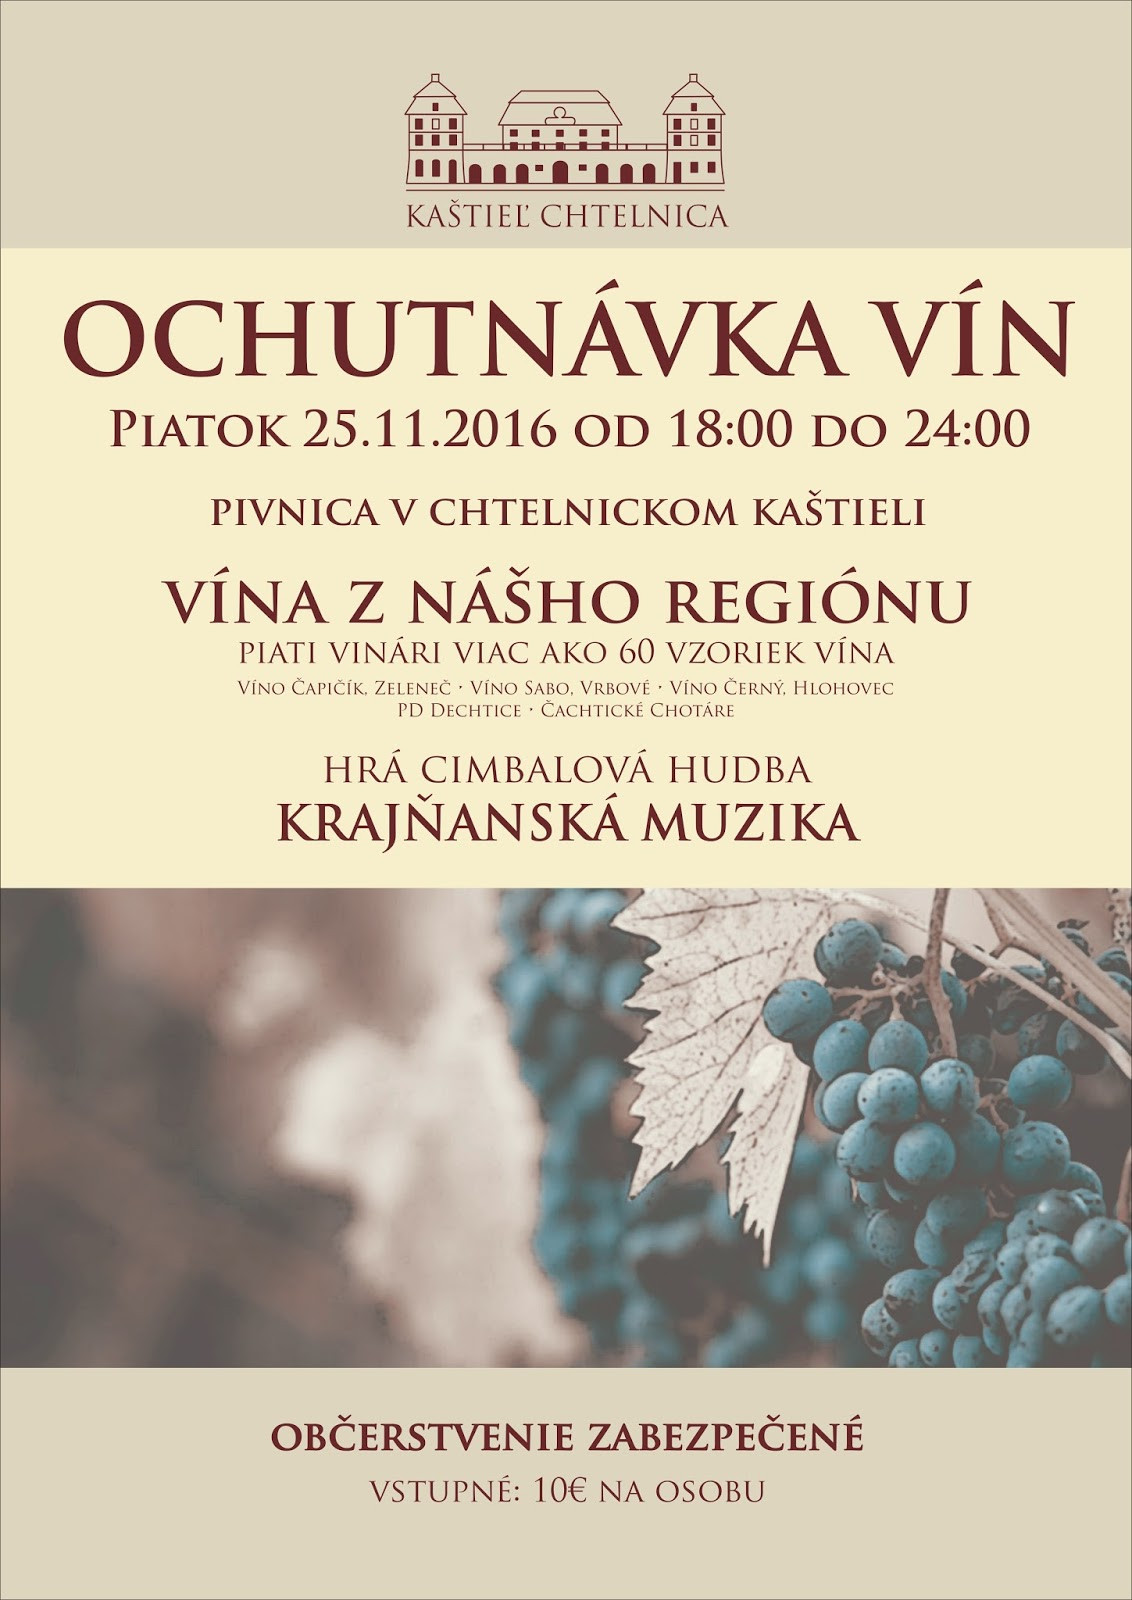 Ochutnávka vín v Chtelnickom kaštieli (25.11.2016)